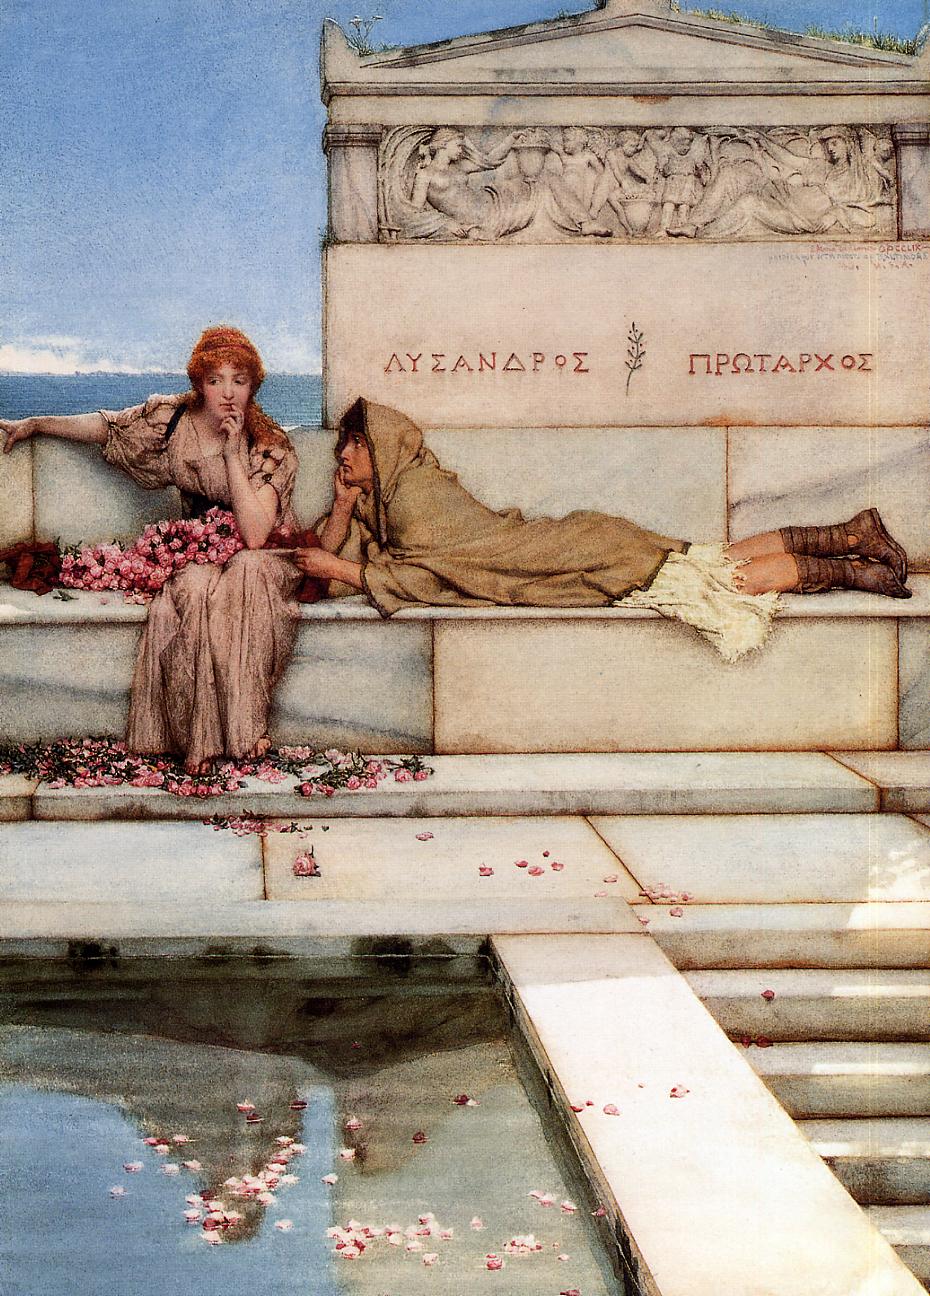 Xanthe And Phaon by Lawrence Alma-Tadema